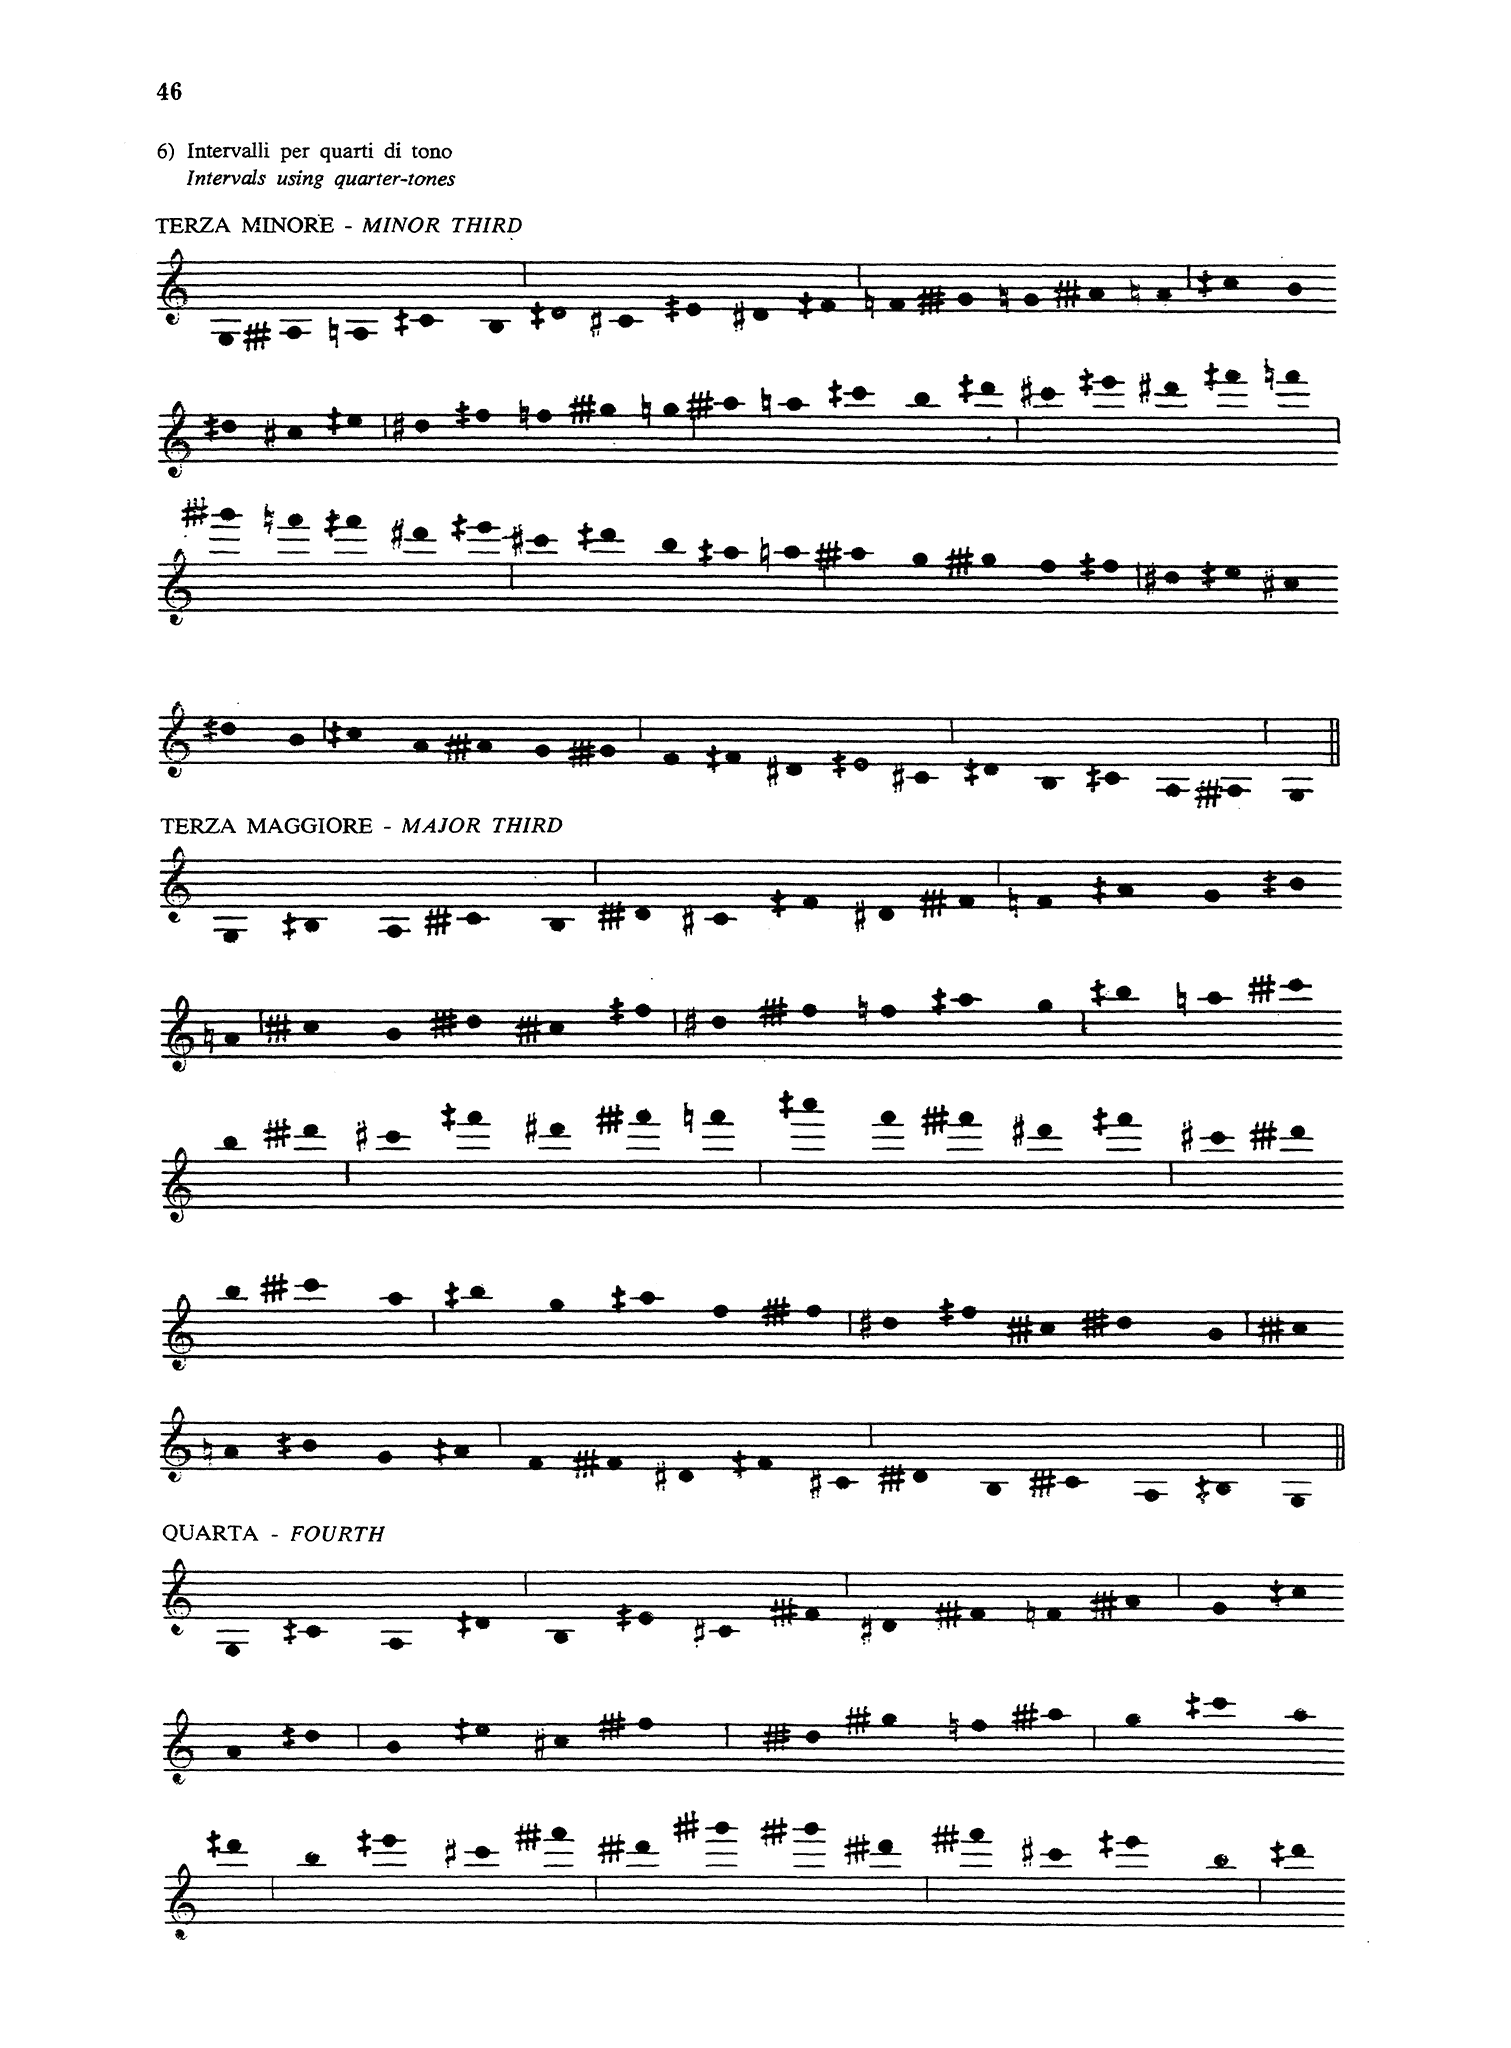 Garbarino Bartolozzi Clarinet Method page 46